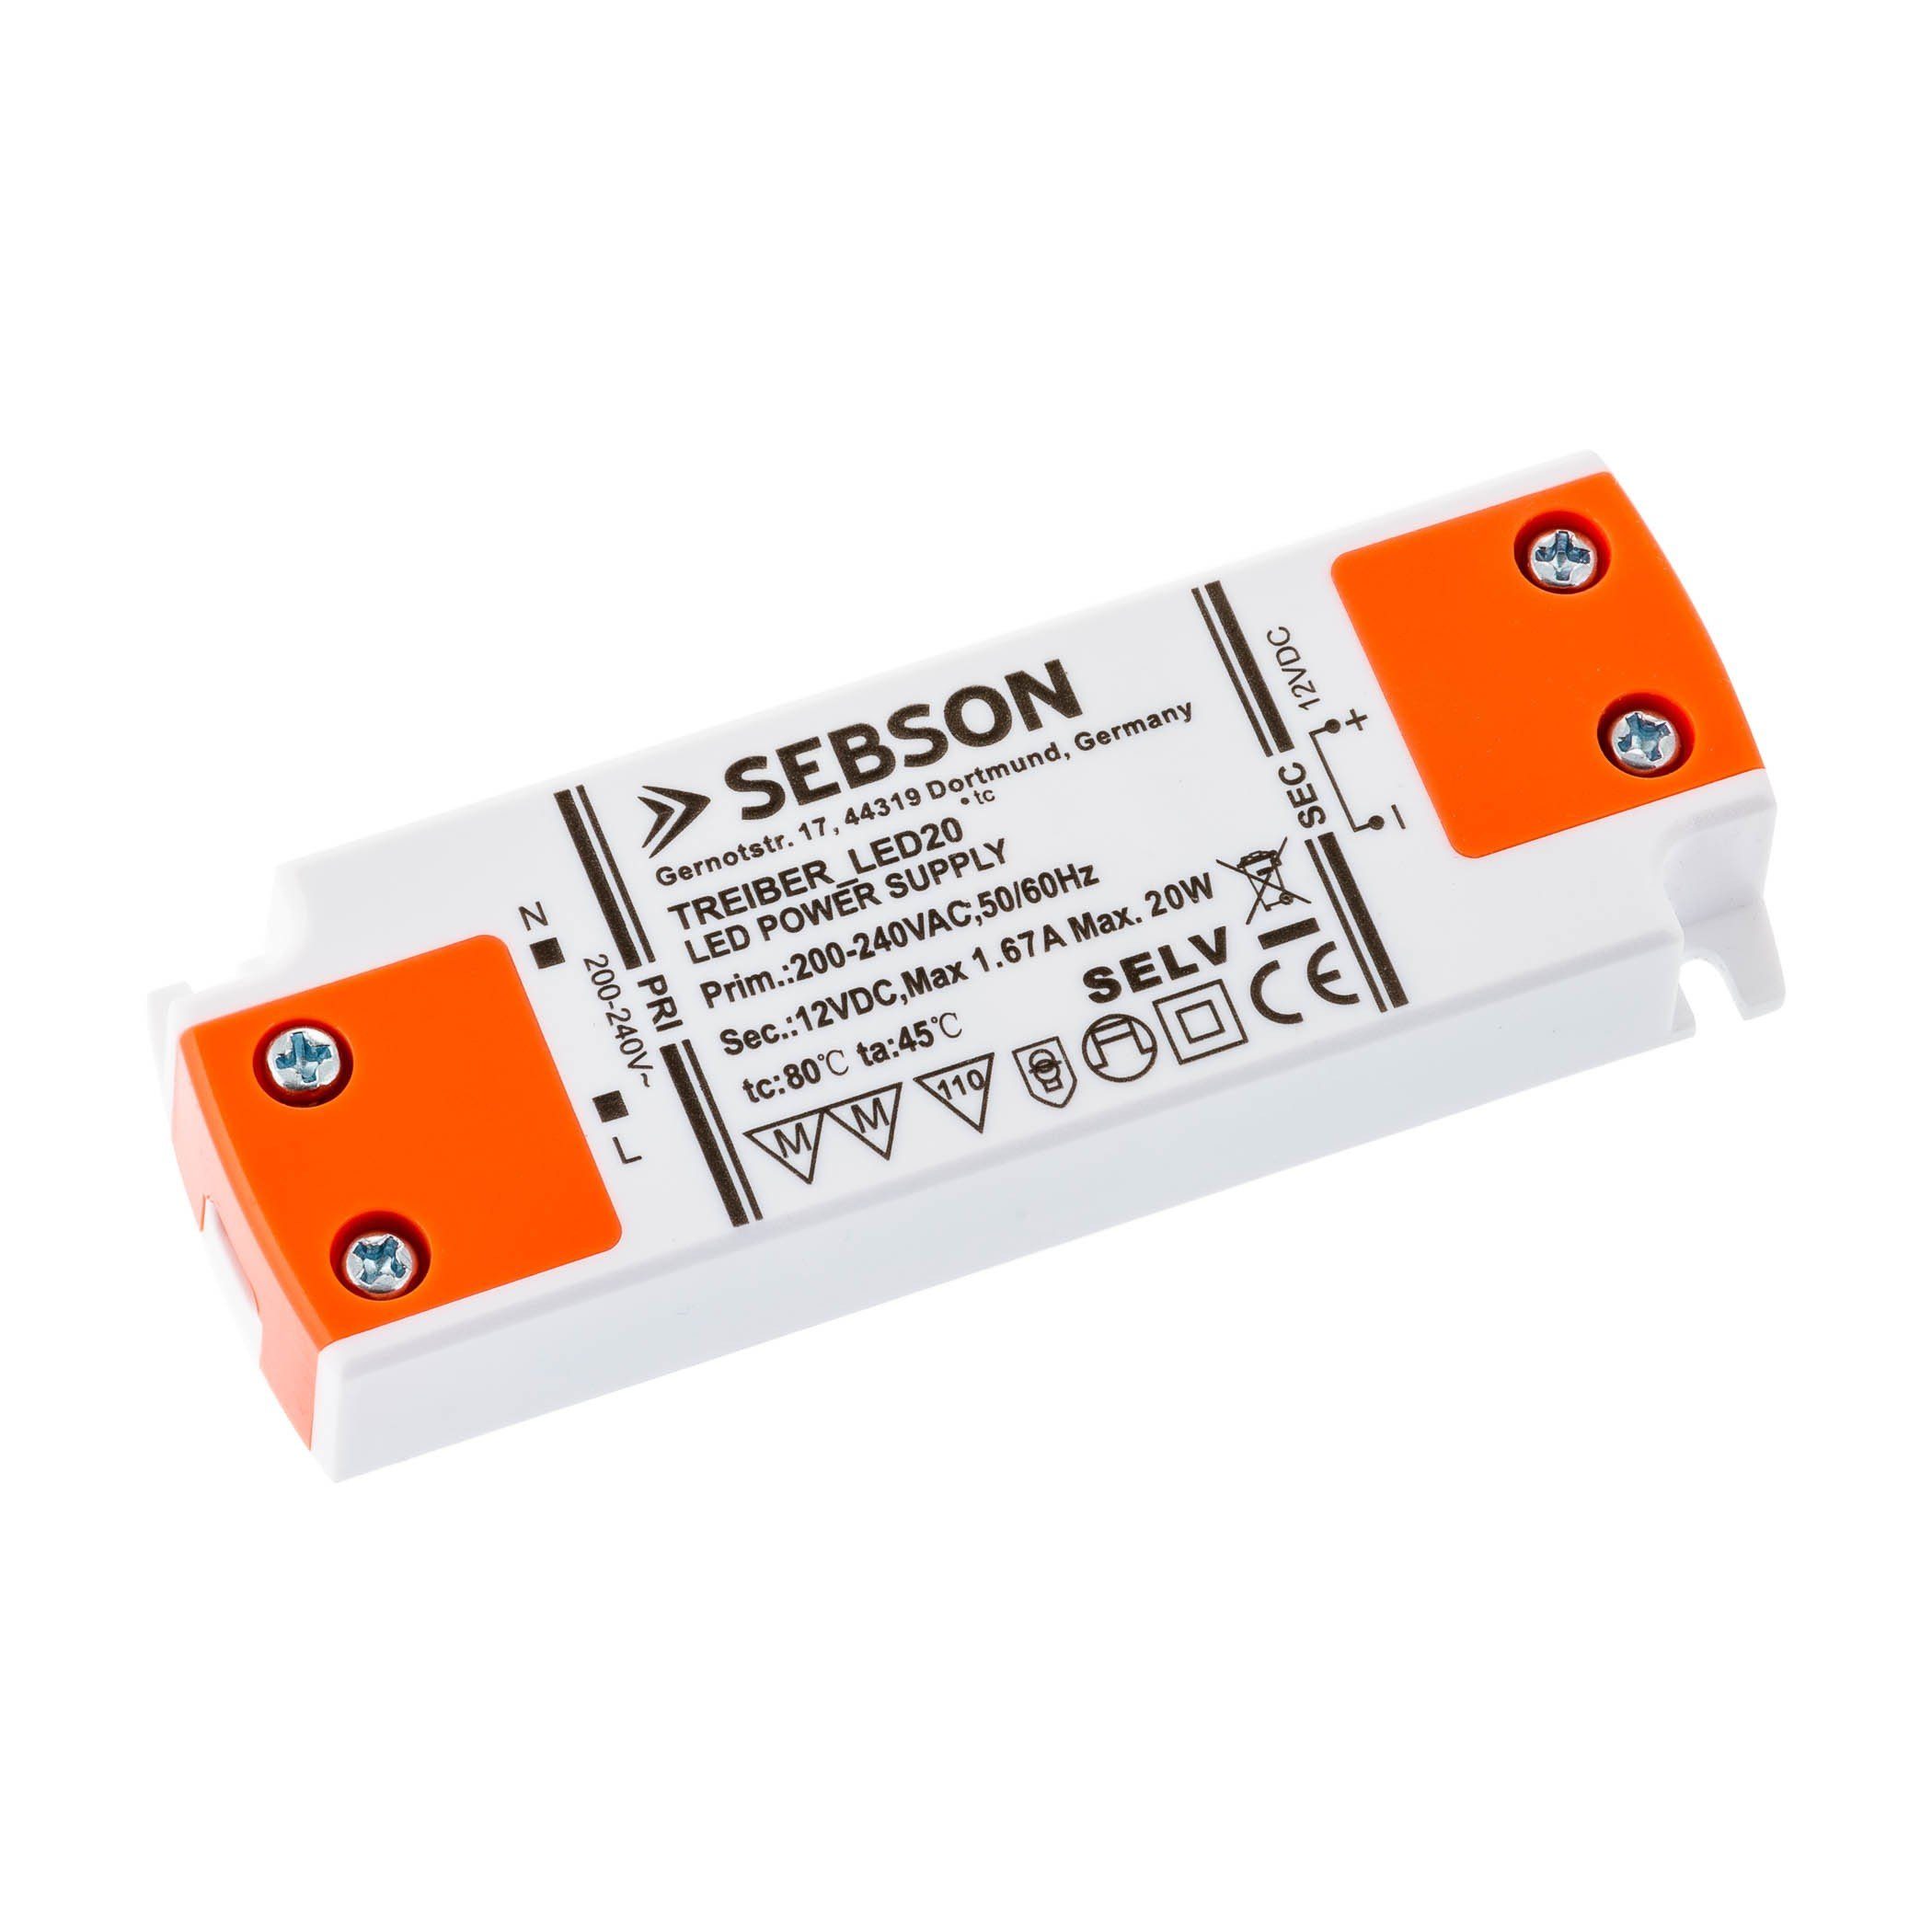 SEBSON 20W LED Treiber / LED Trafo 102x35x16mm - 12V Konstante  Ausgangsspannung, Transformator, Netzteil für LED Lampen G4, MR11, GU5.3,  MR16 Trafo